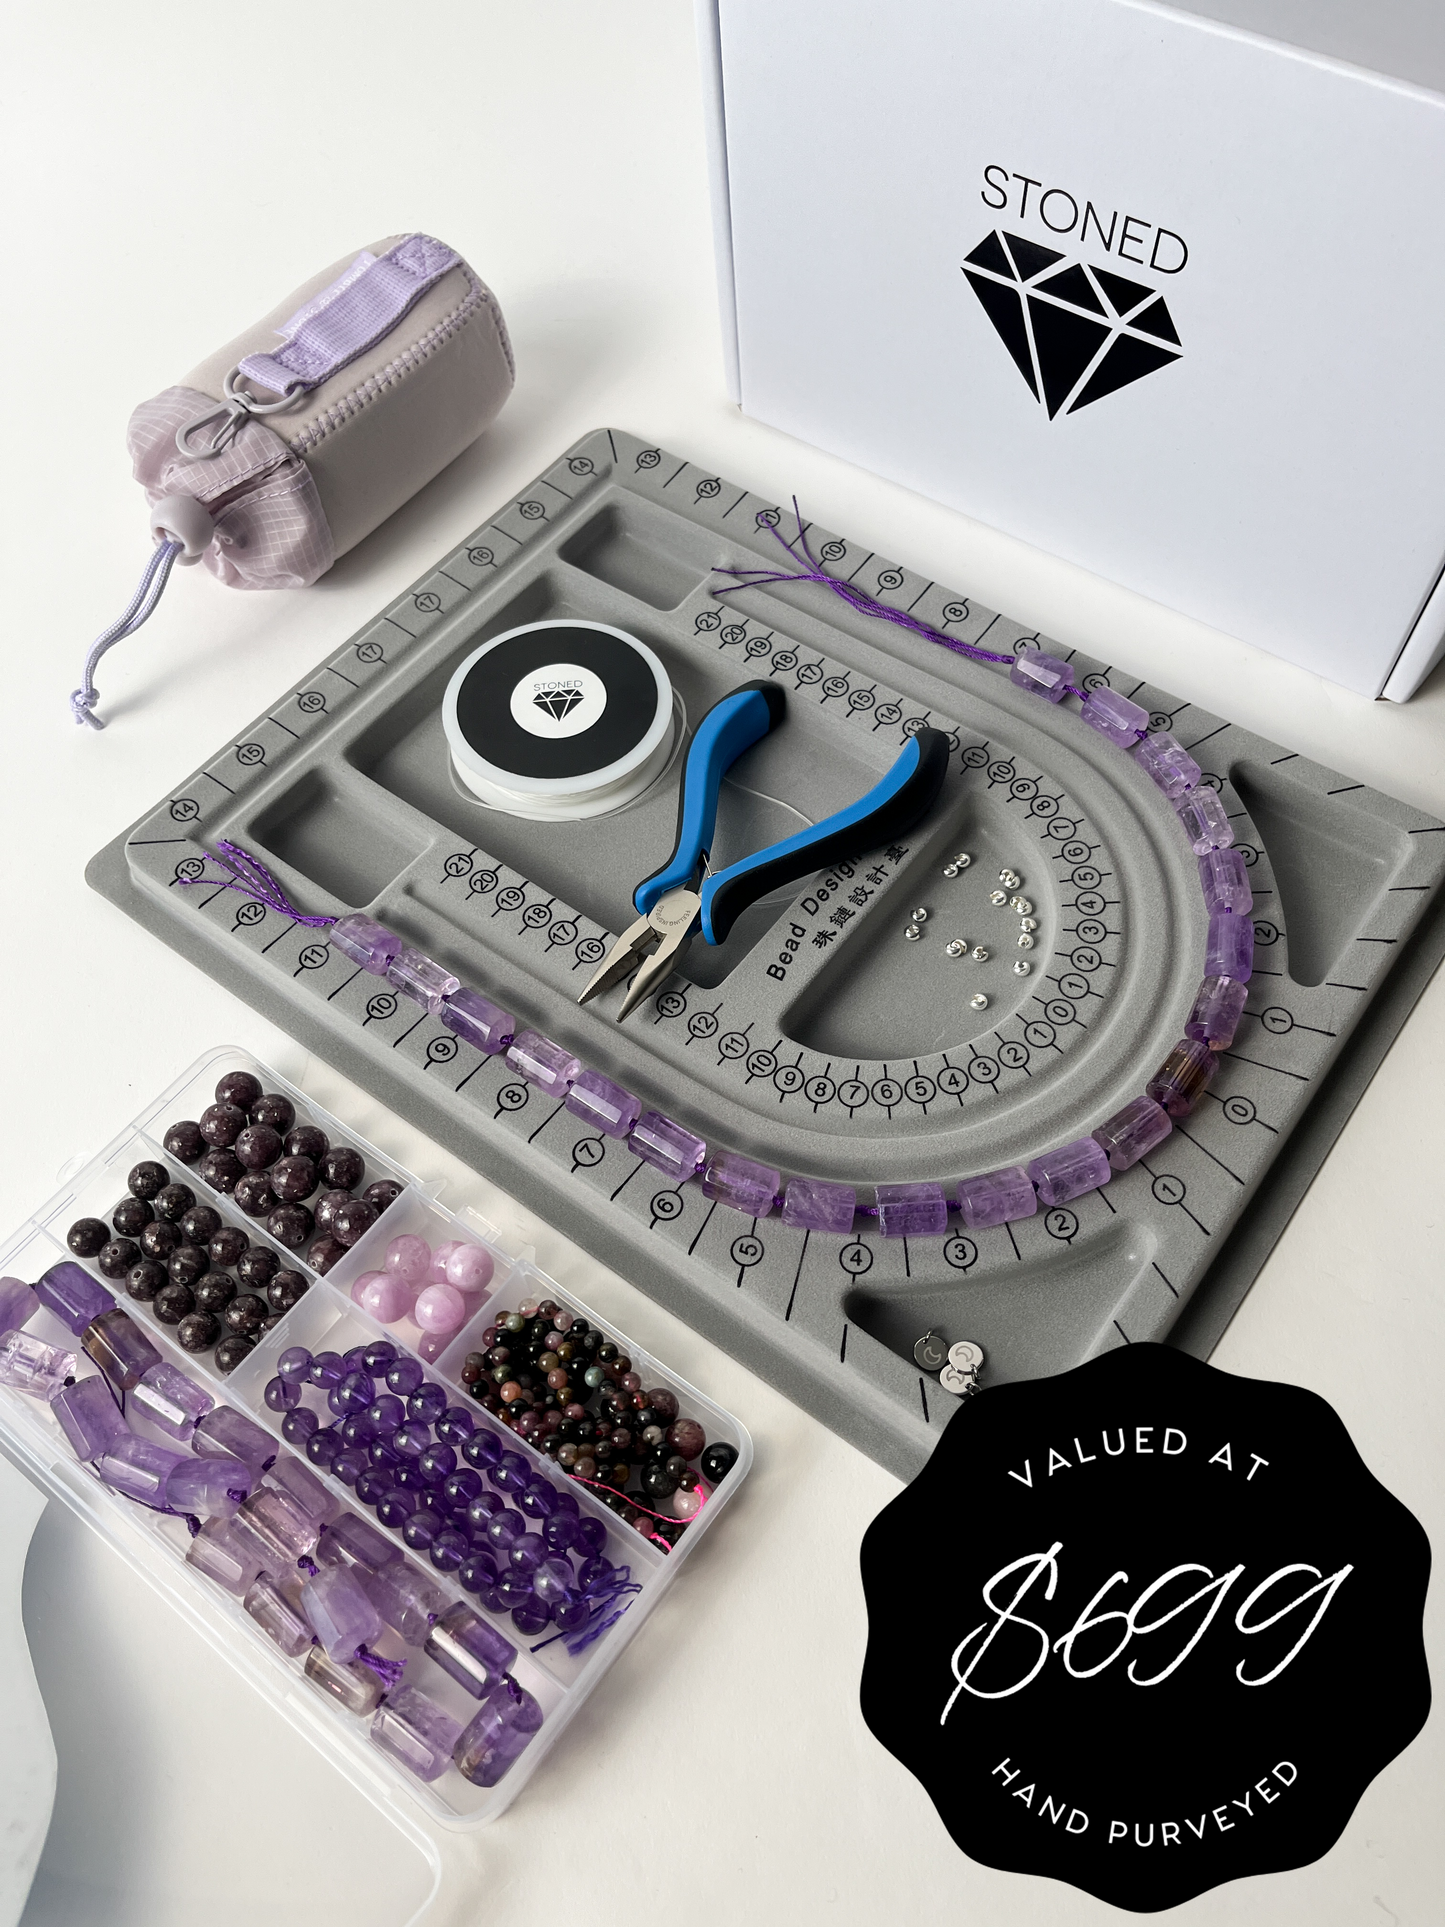 "Purple Harmony" DIY Mala Making Kit